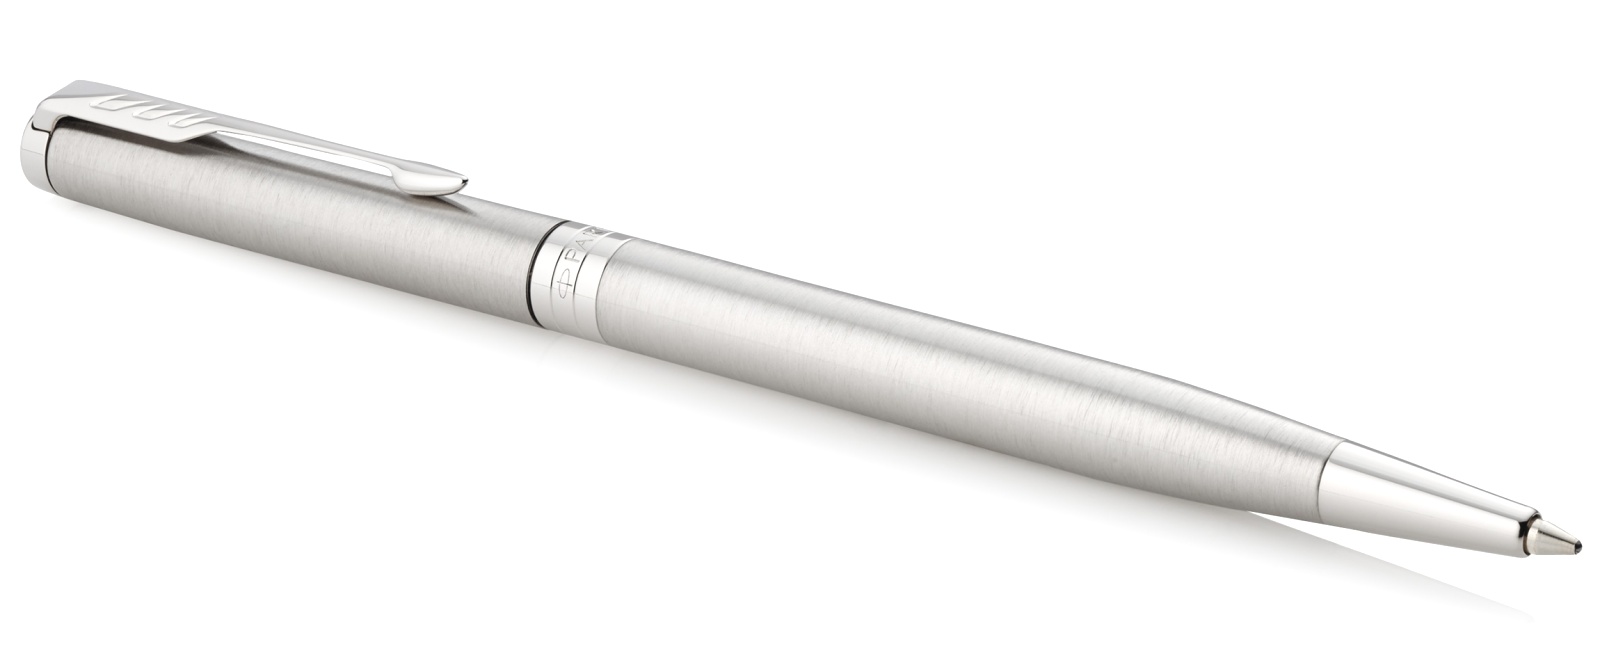  Шариковая ручка Parker Sonnet Slim Core K426, Stainless Steel CT, фото 2